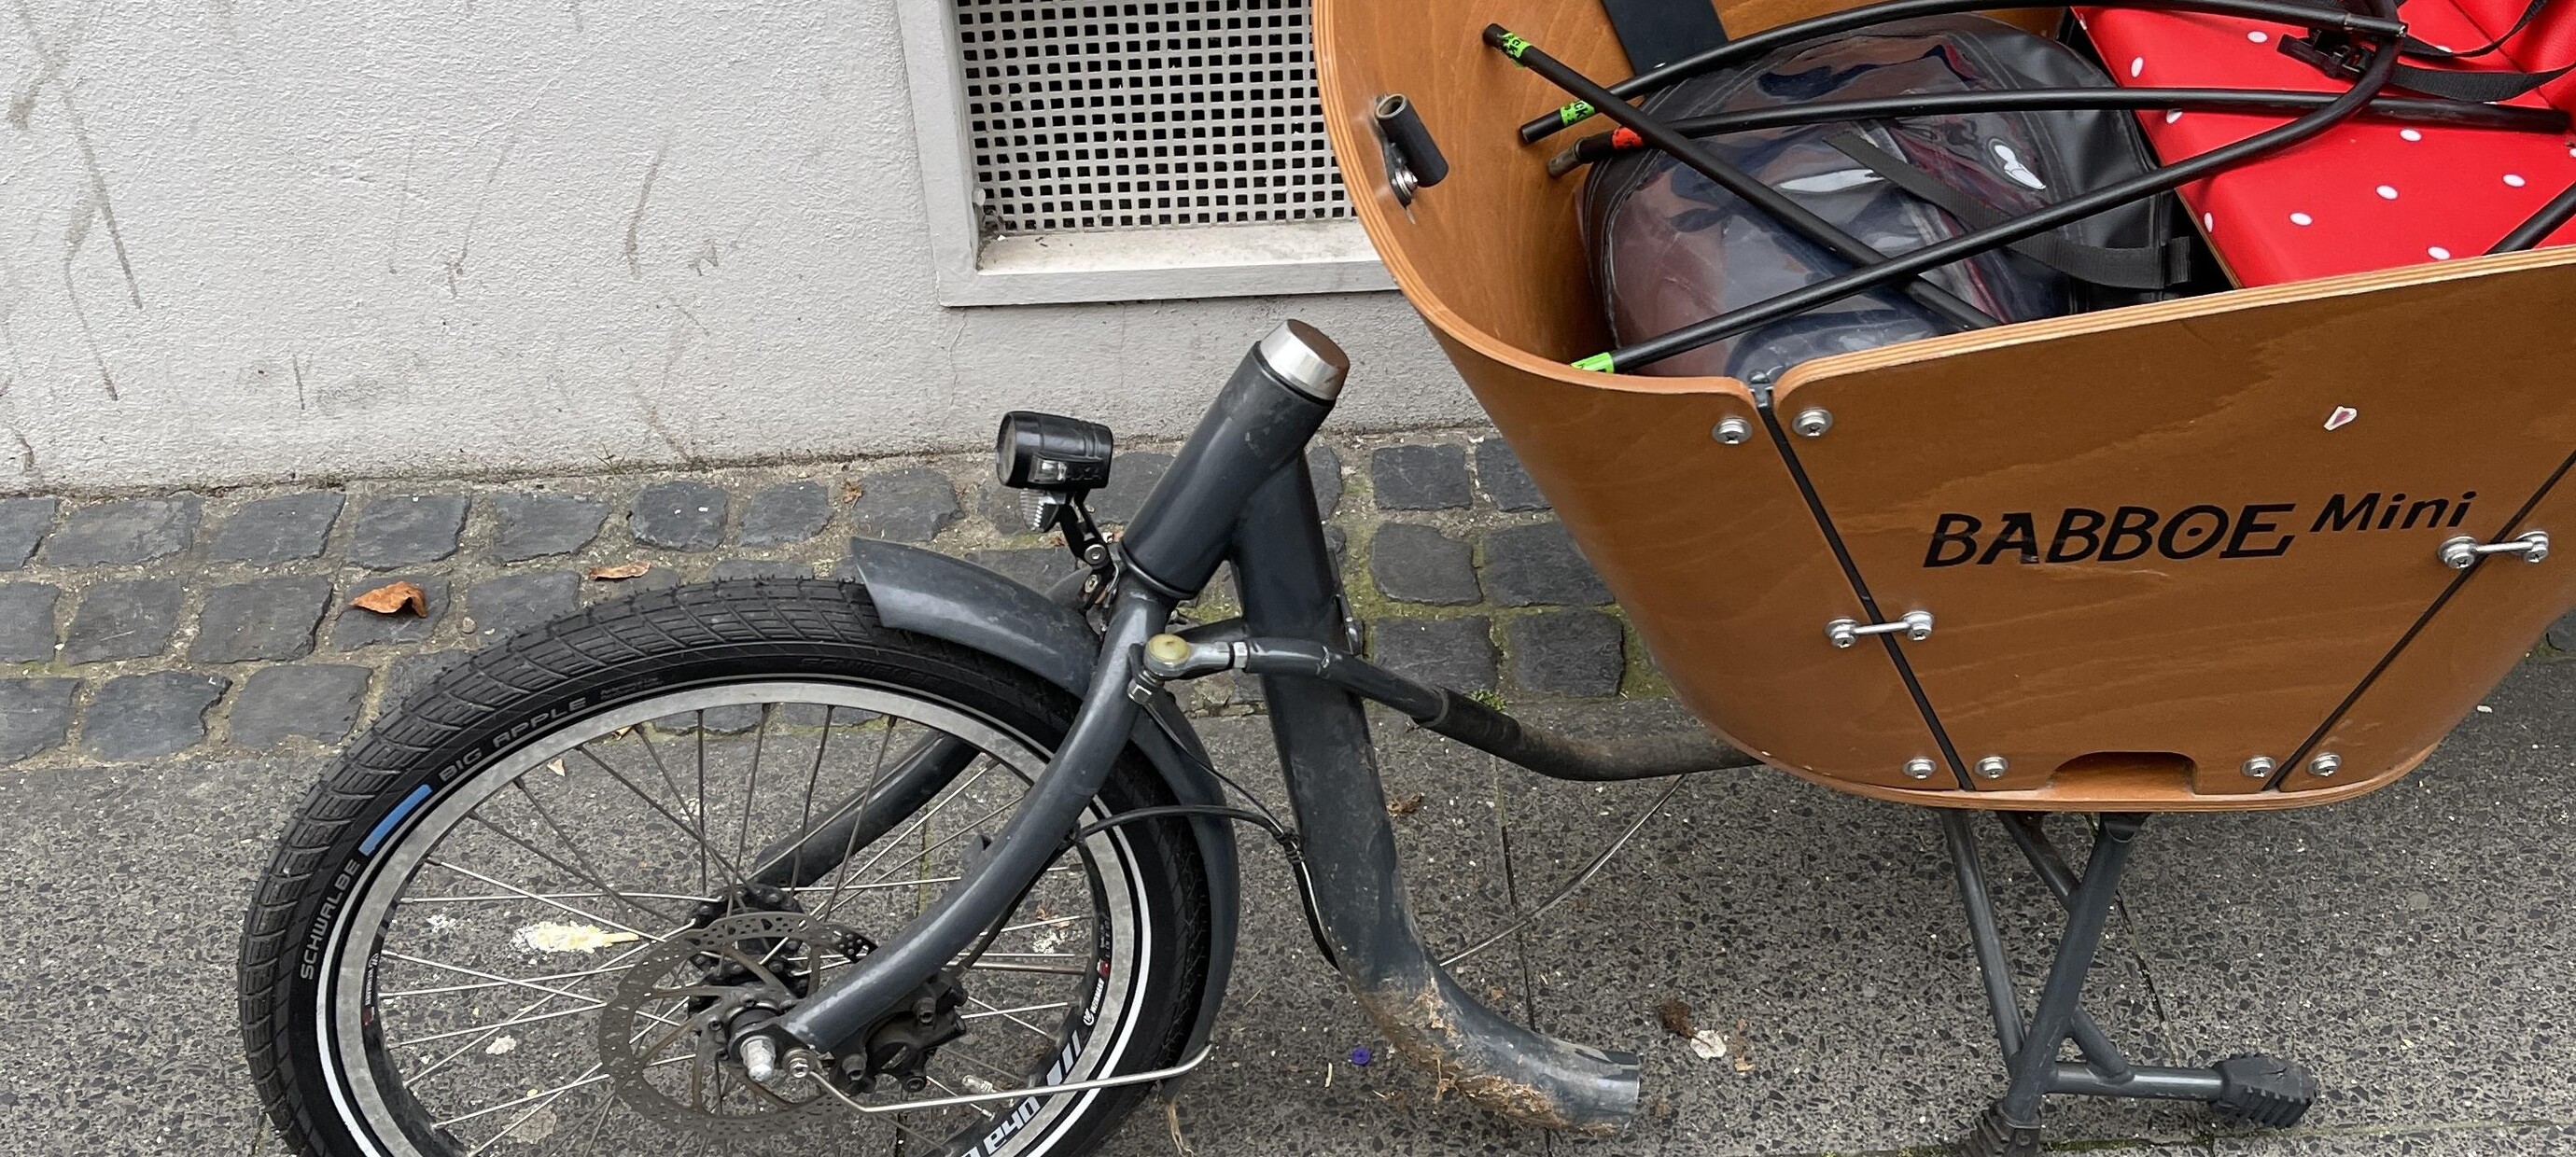 Cargo bike brand Babboe frame failures - CASH BACK SUPPORT!